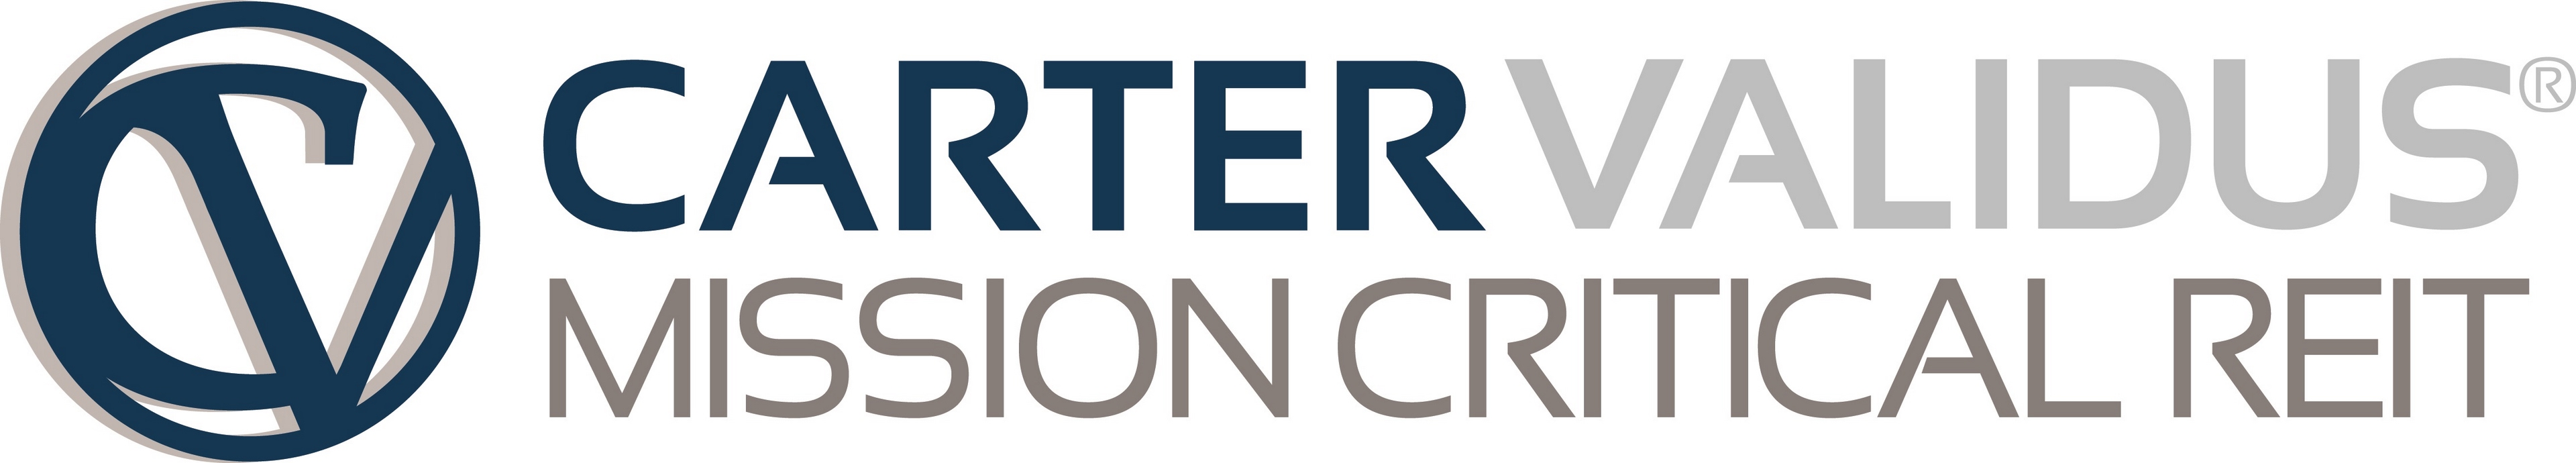 Carter Validus Mission Critical REIT Company Logo